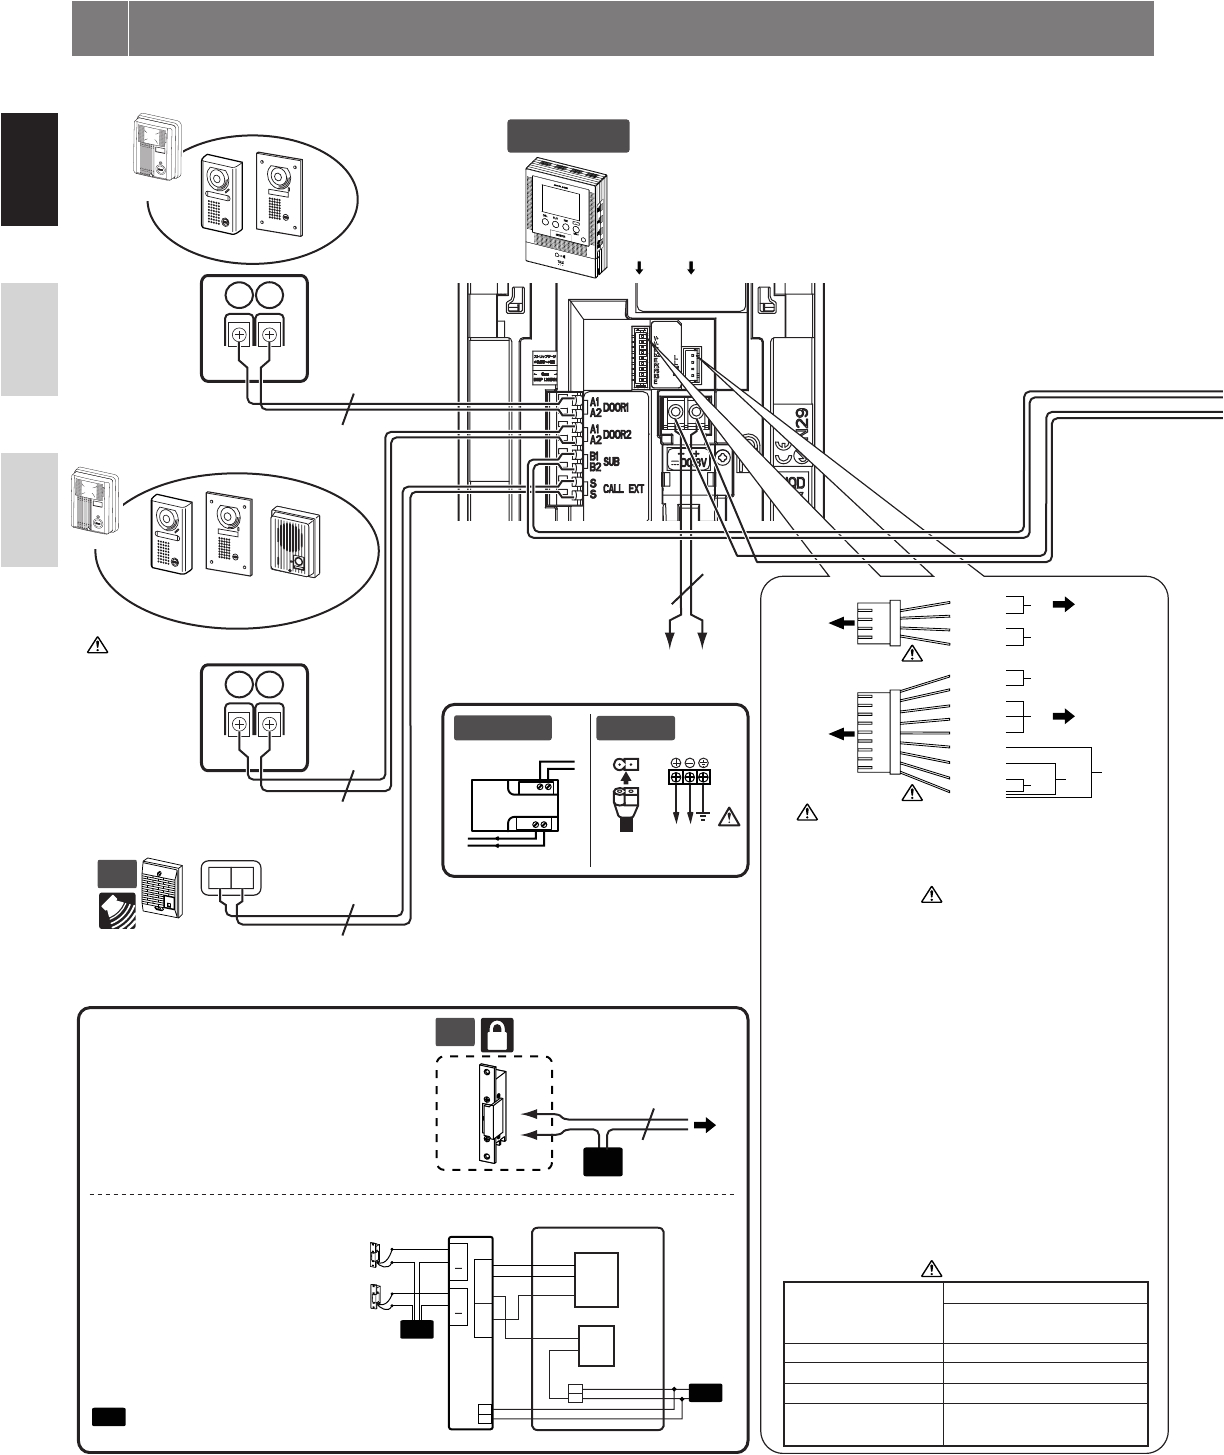 aiphone intercom wiring diagram free wiring diagram comelit intercom wiring diagram phone intercom wiring diagram